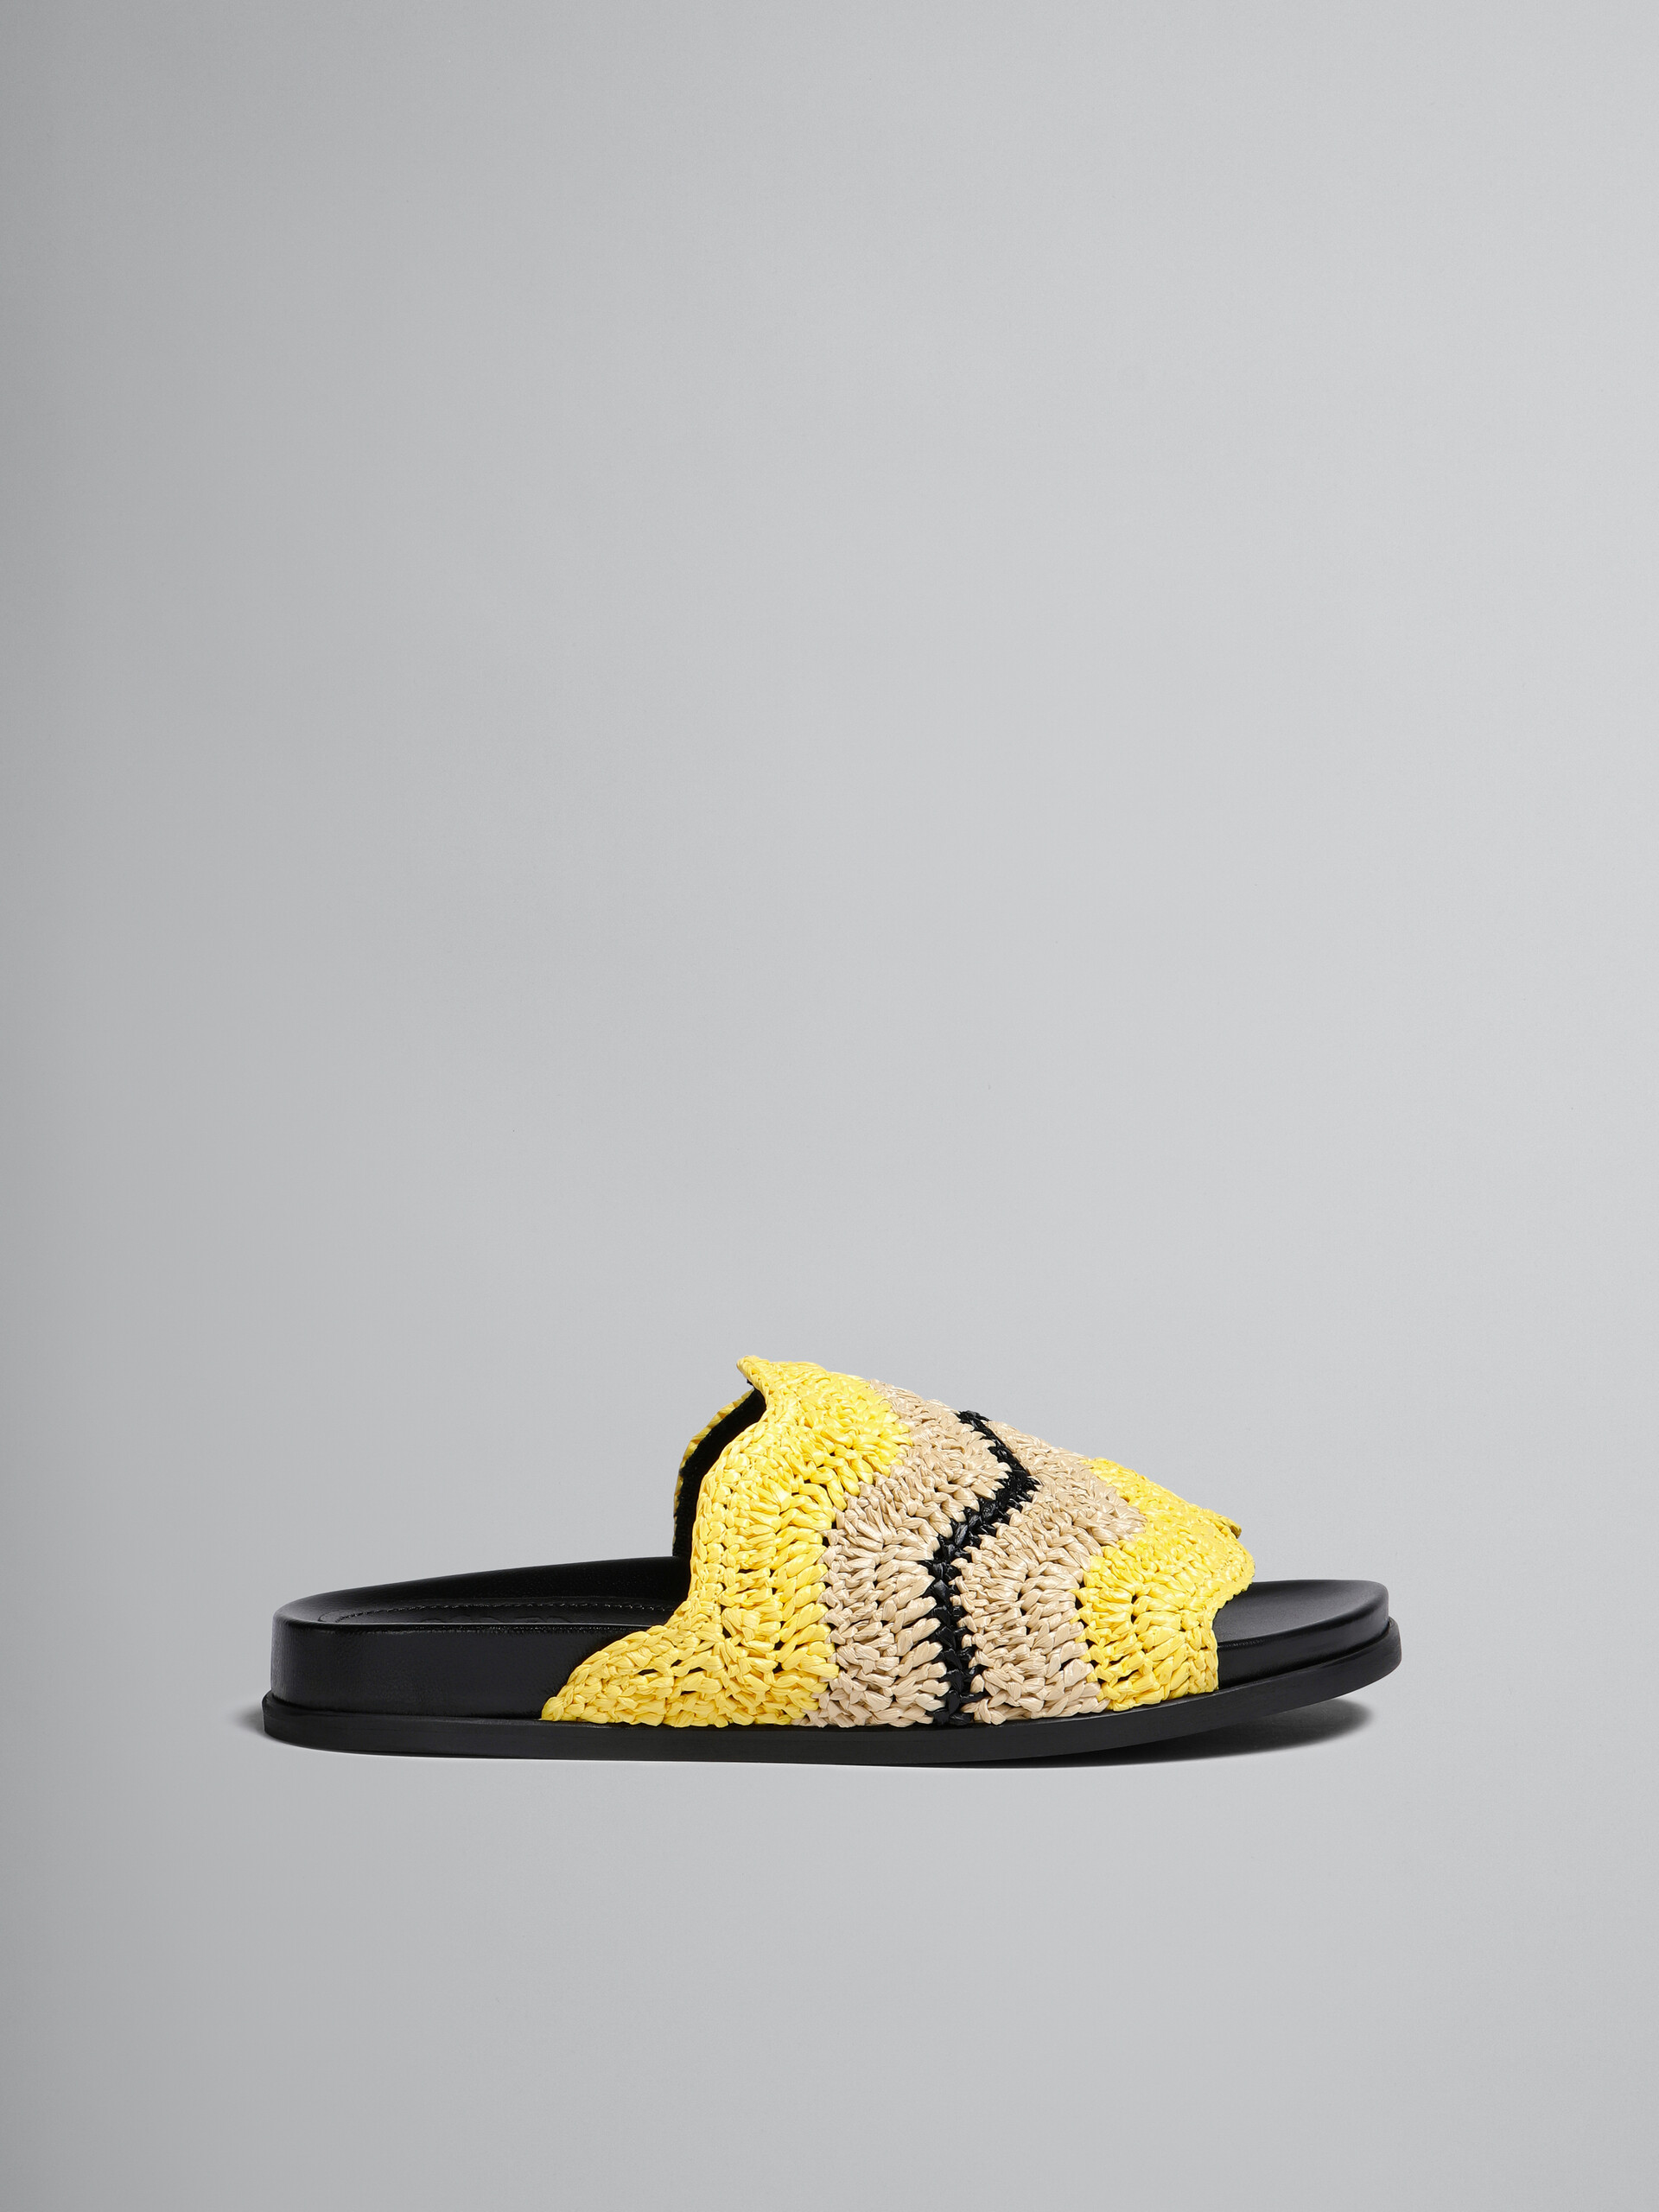 Marni x No Vacancy Inn - Yellow crochet raffia slide - Sandals - Image 1